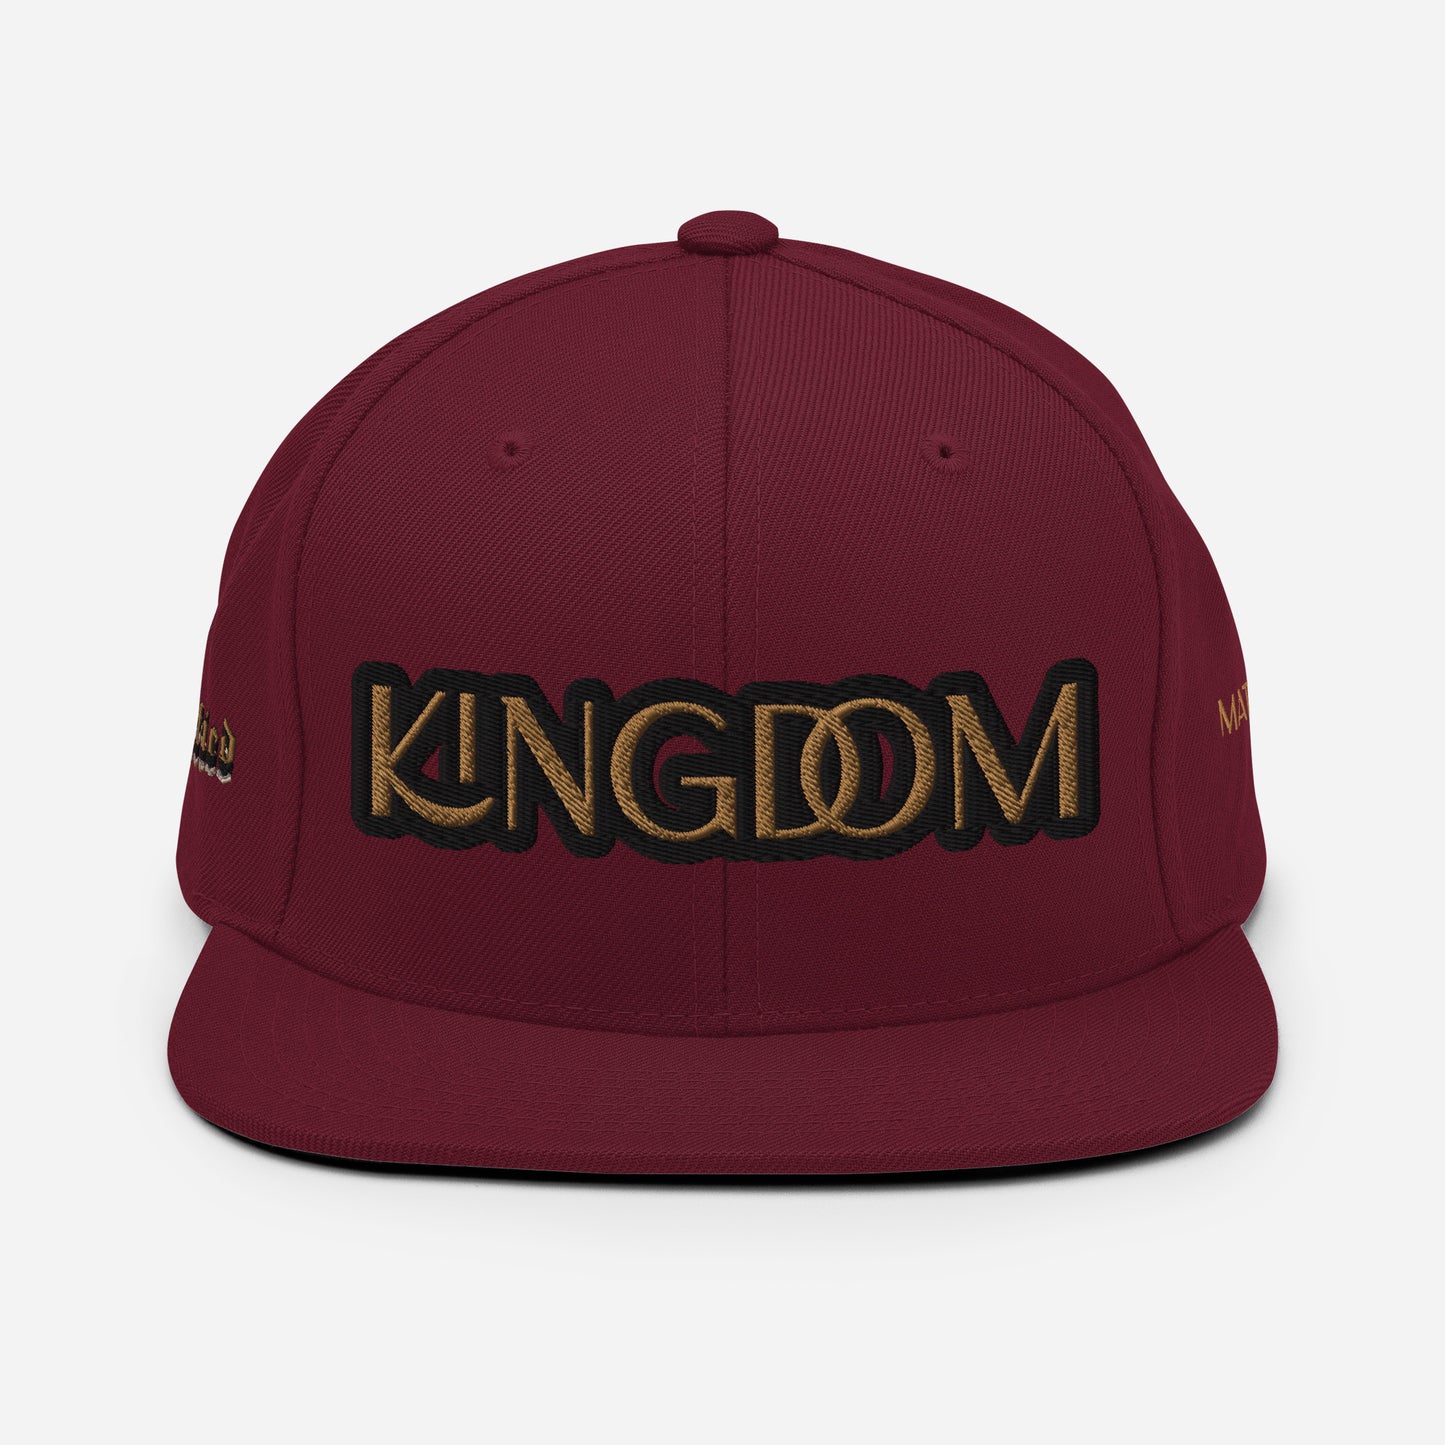 Kingdom- Snapback Hat